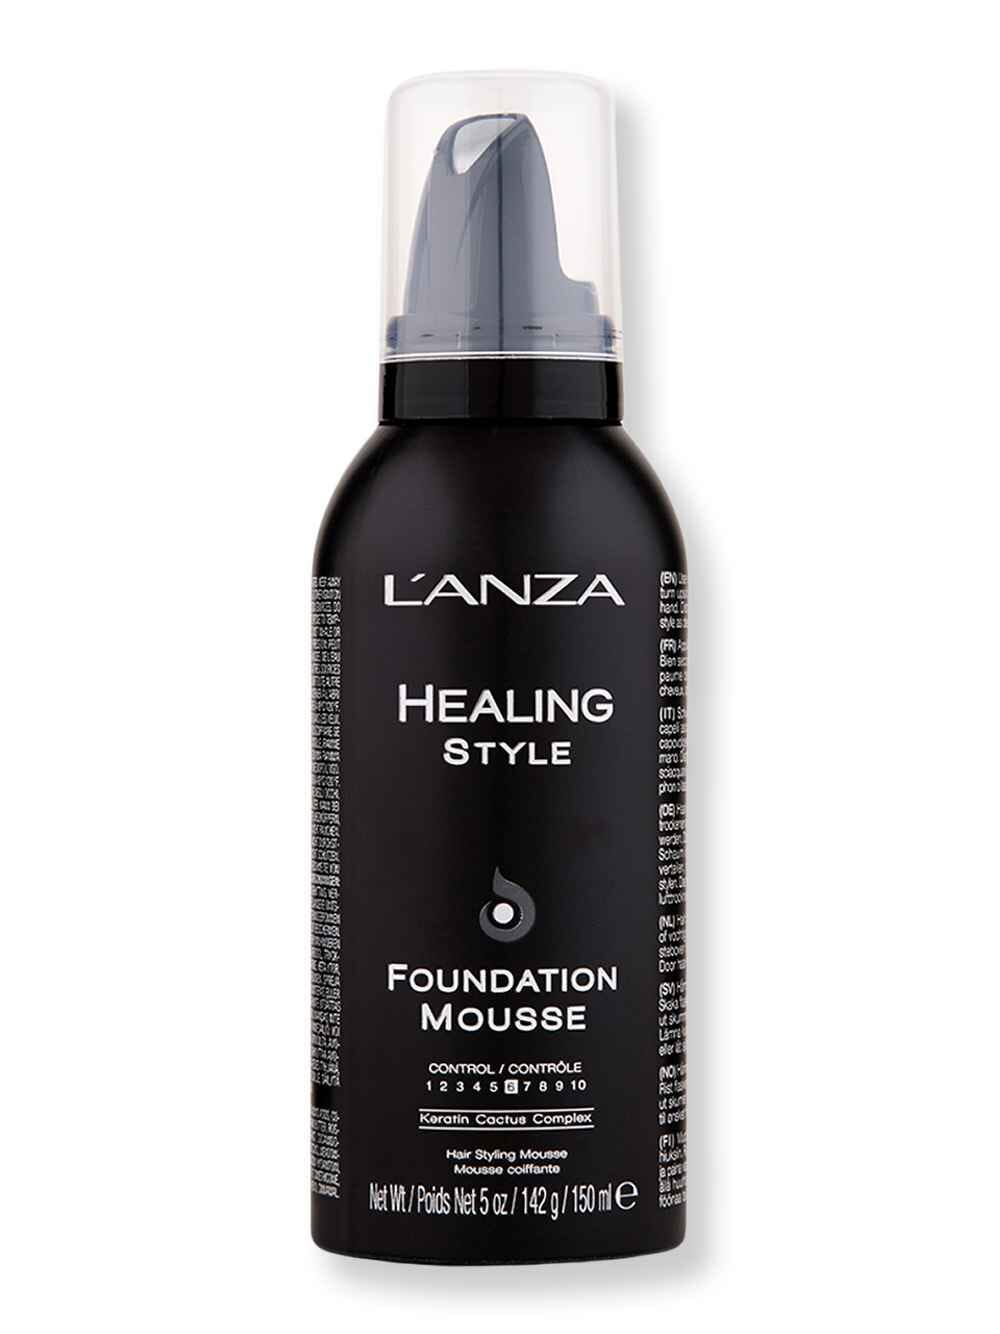 L'Anza L'Anza Healing Style Foundation Mousse 150 ml Mousses & Foams 